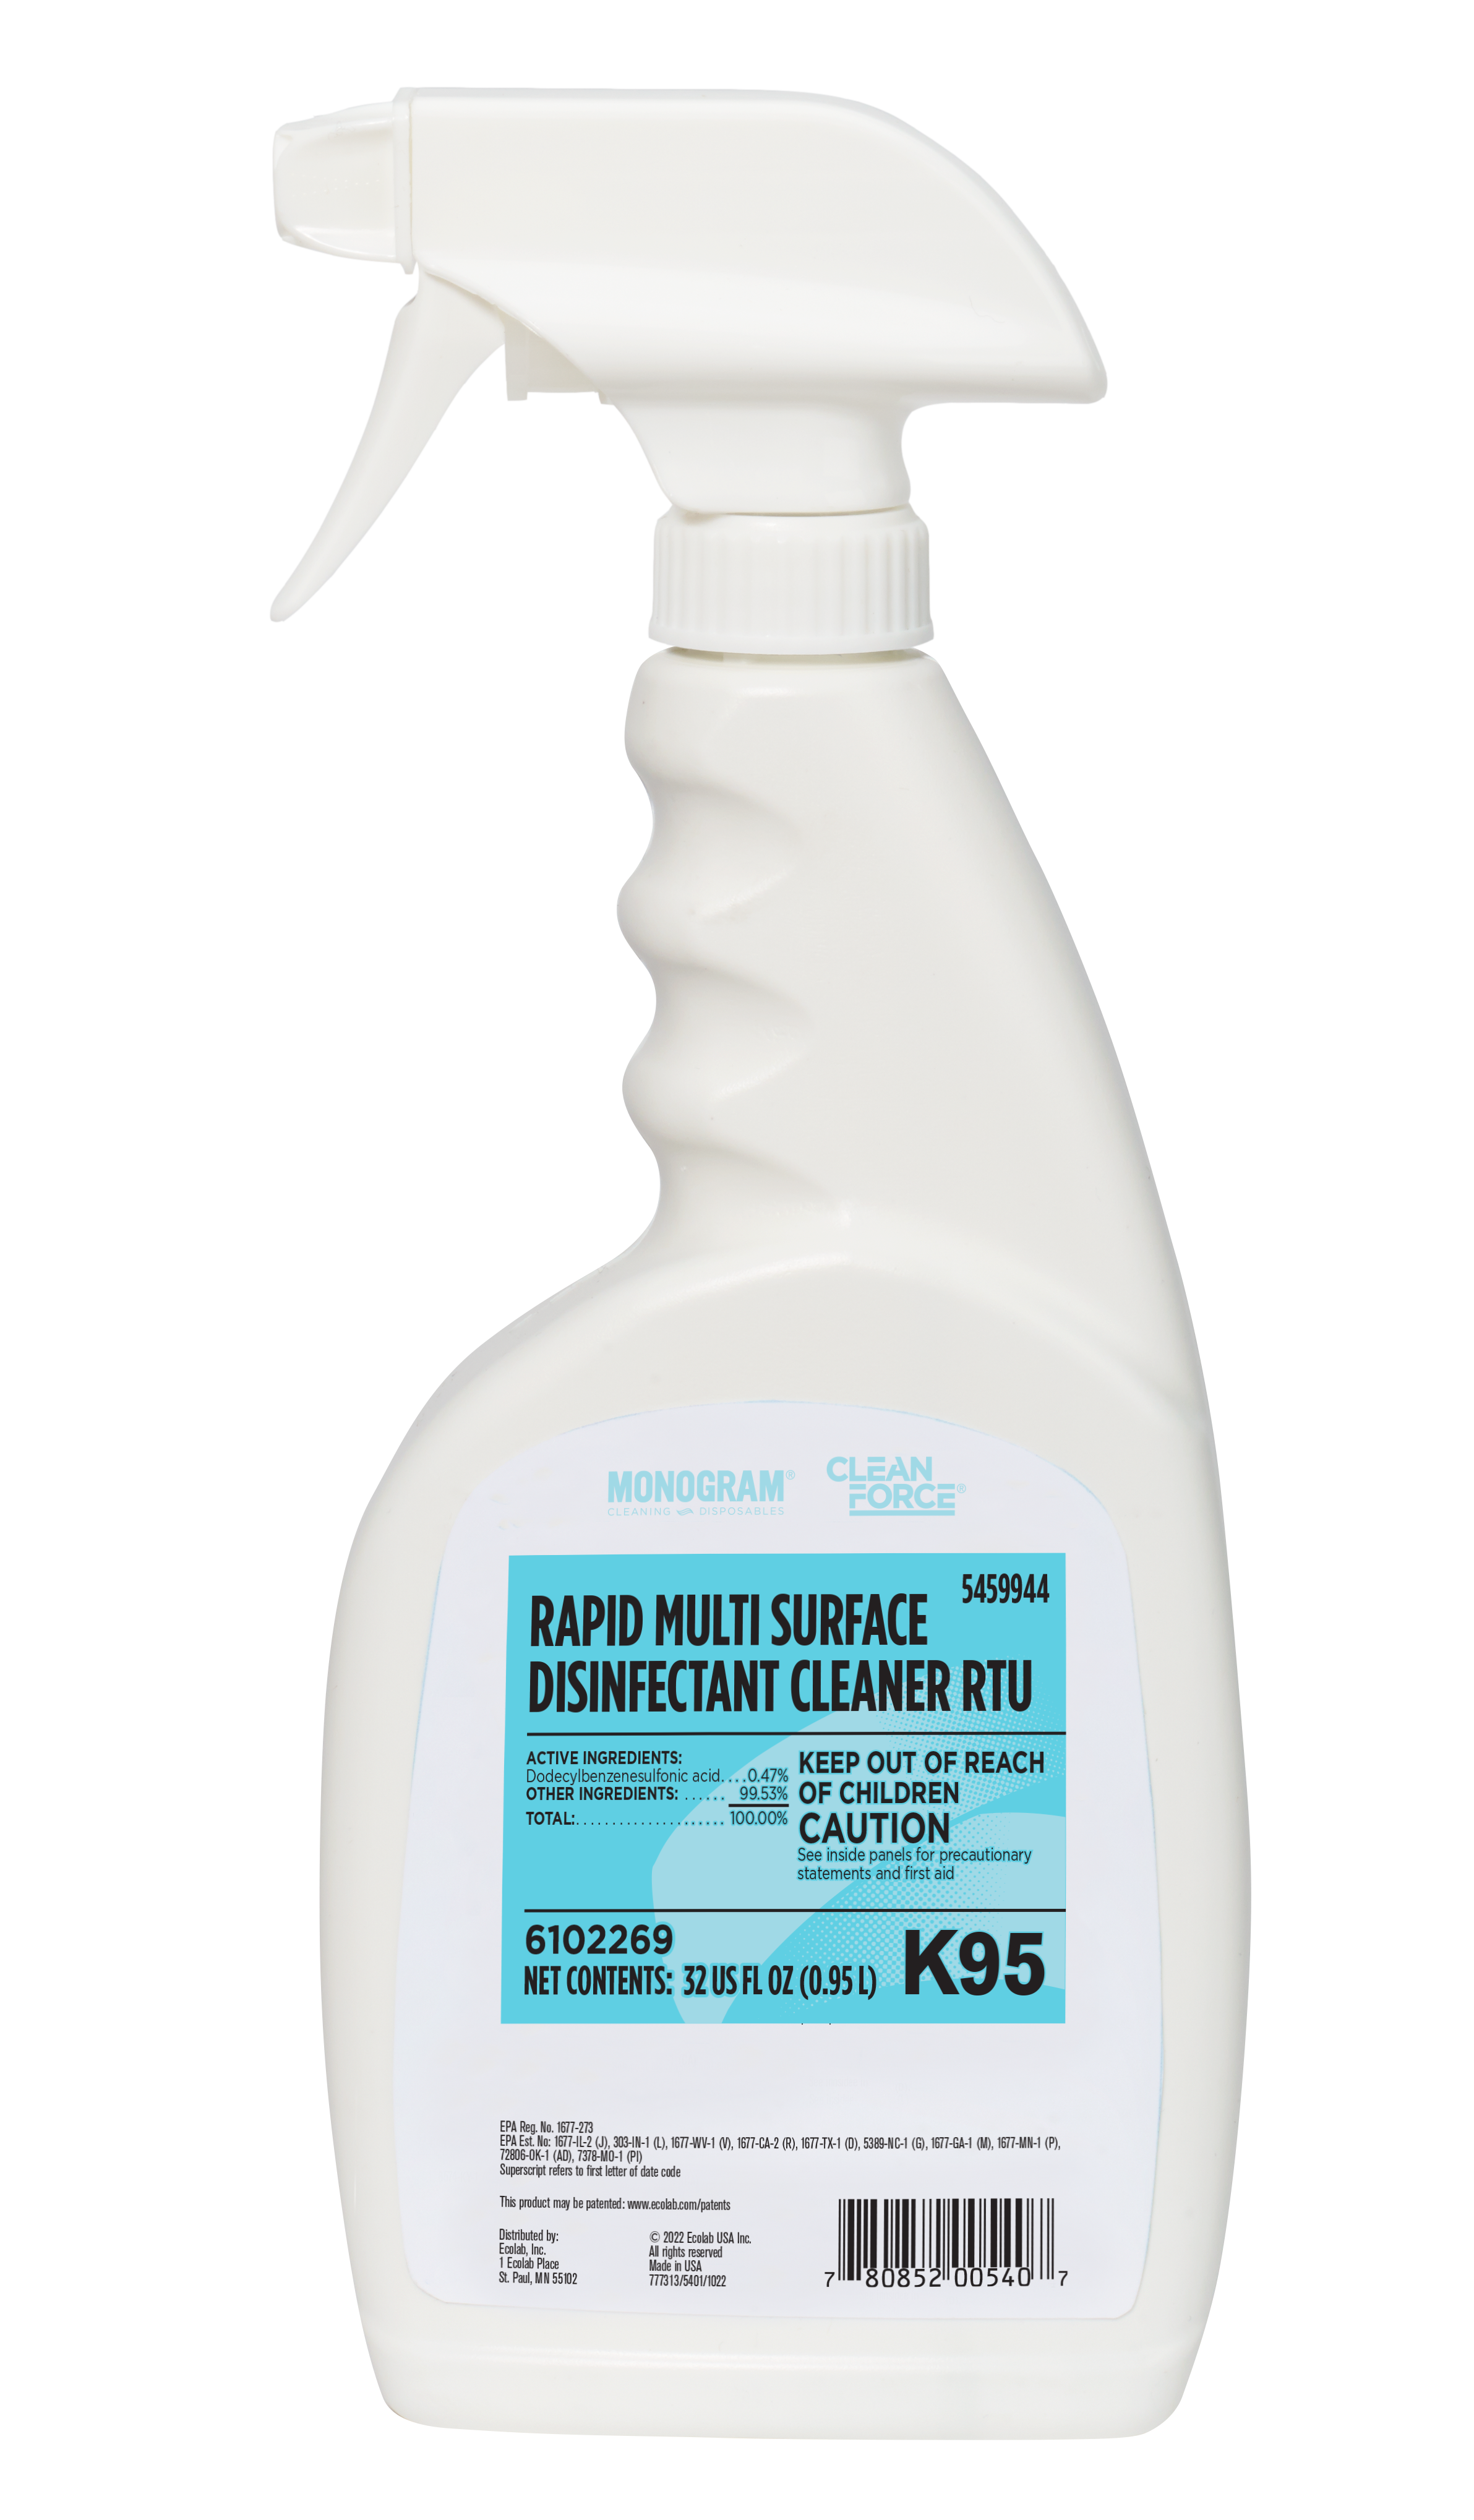 Monogram Clean Force Rapid Multi Surface Disinfectant Cleaner RTU